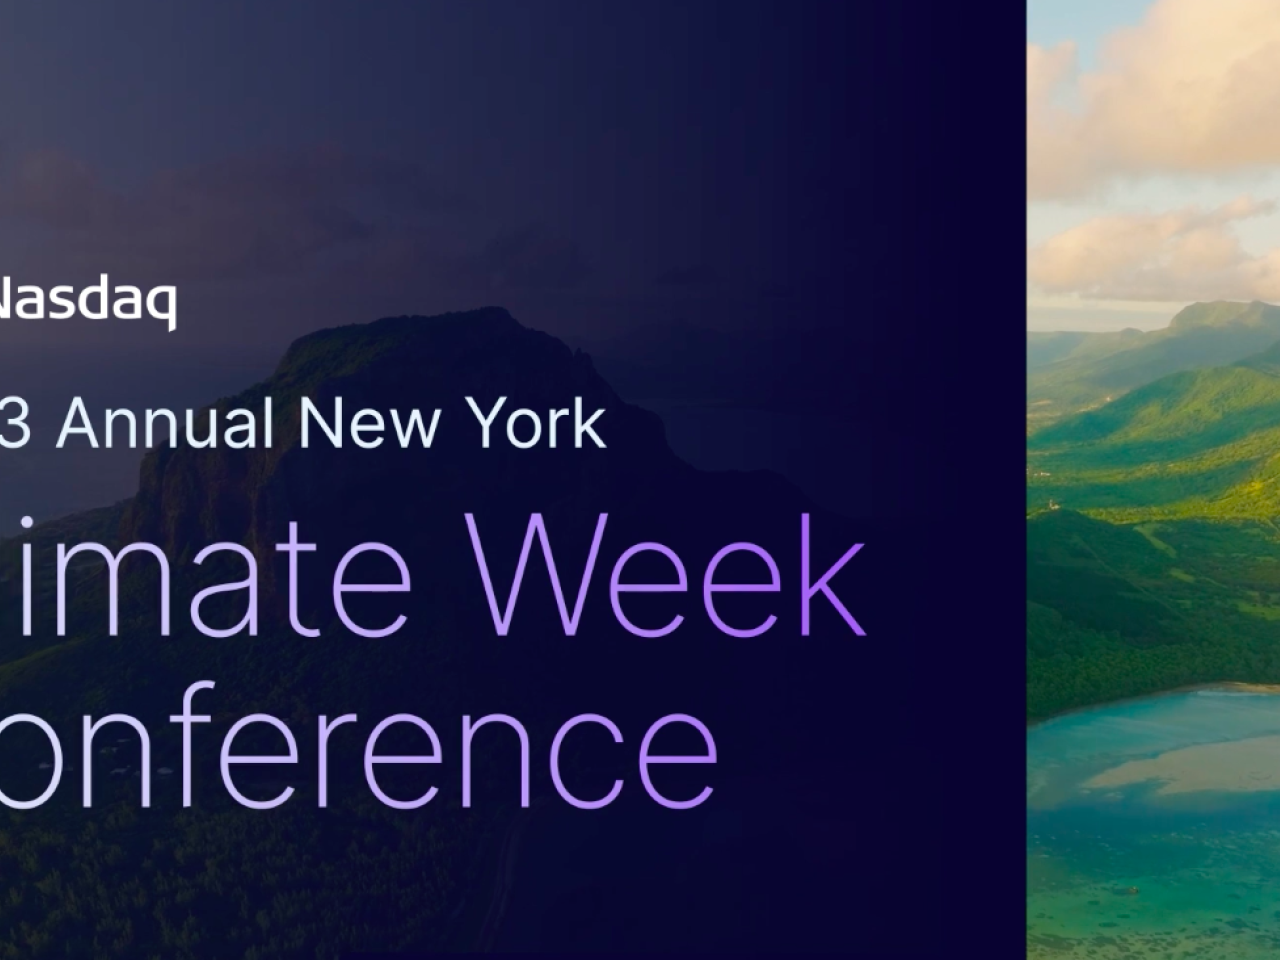 Nasdaq Climate Week Conference